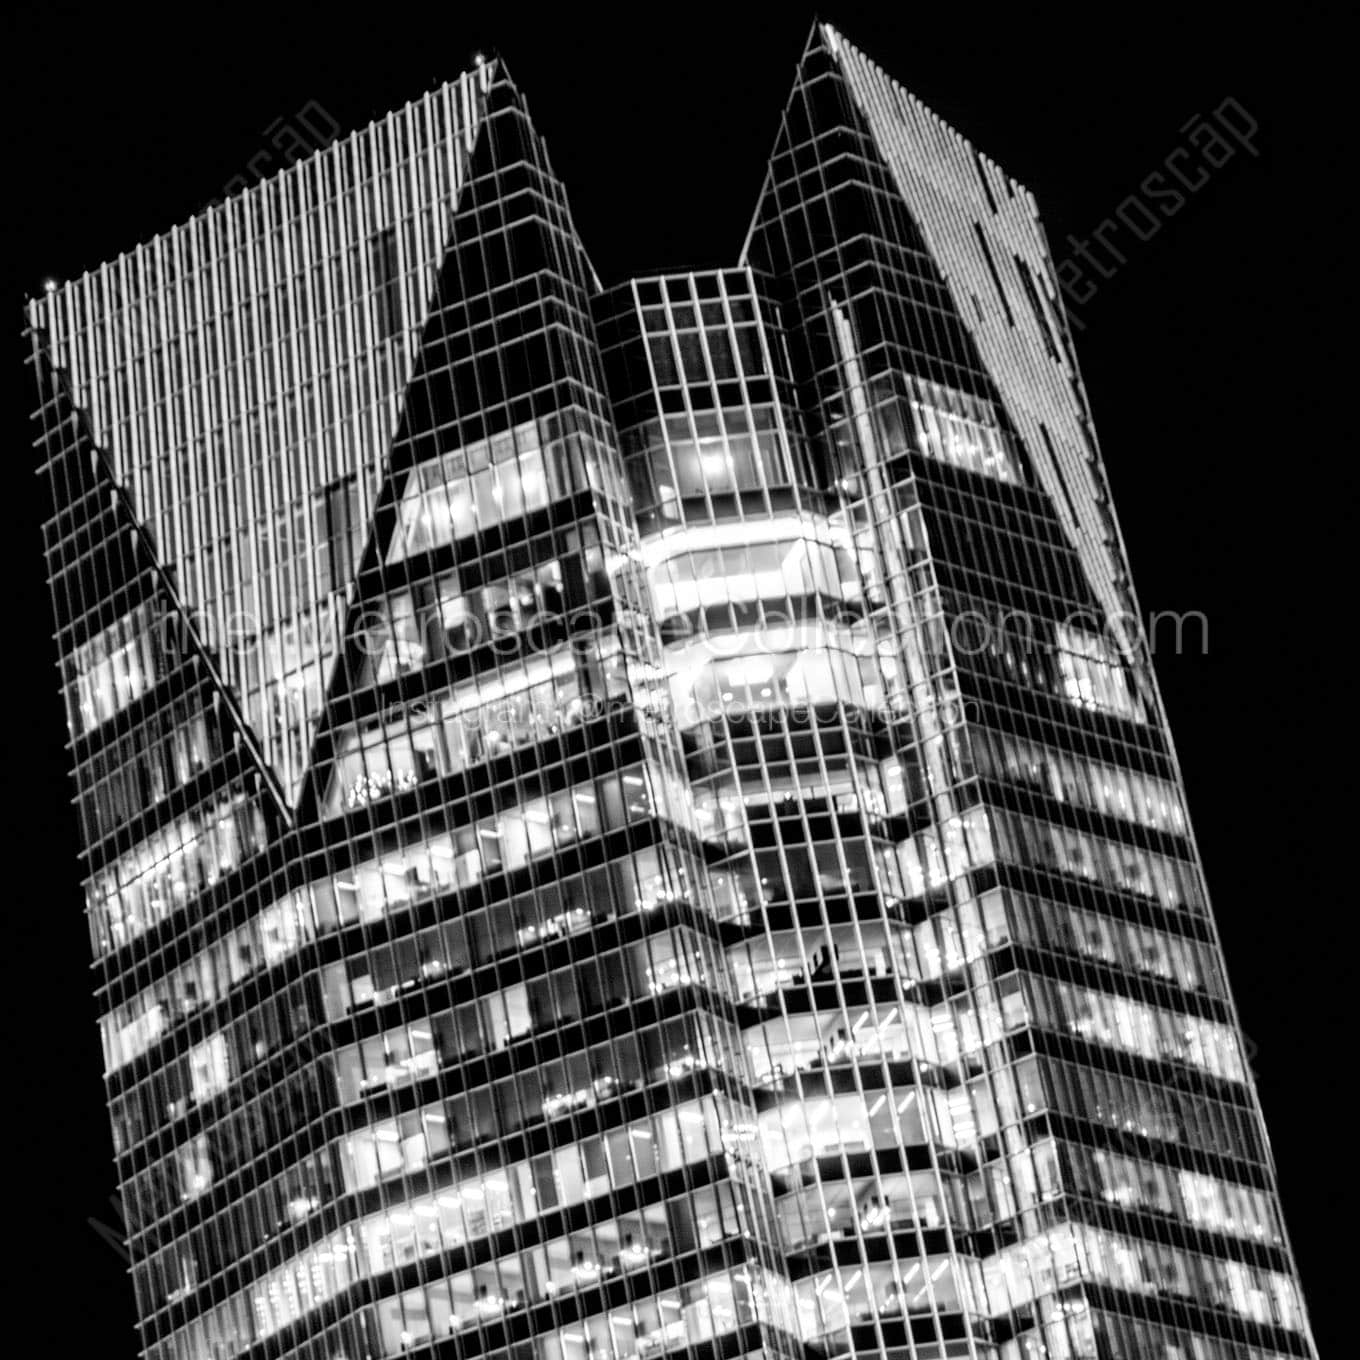 devon energy tower at night Black & White Wall Art